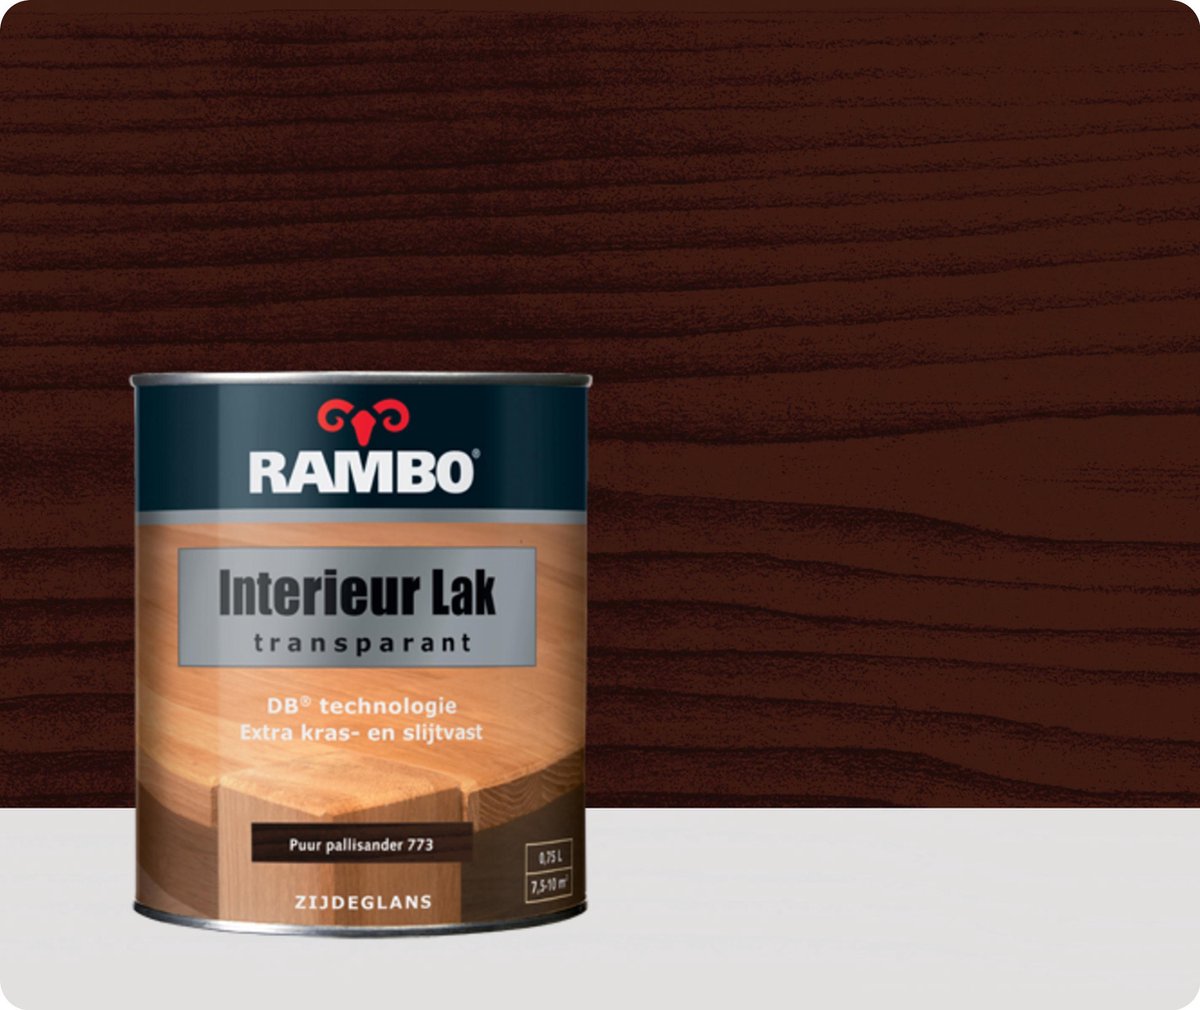 Rambo Interieur Lak Transparant 0,75 liter - Puurpalissander